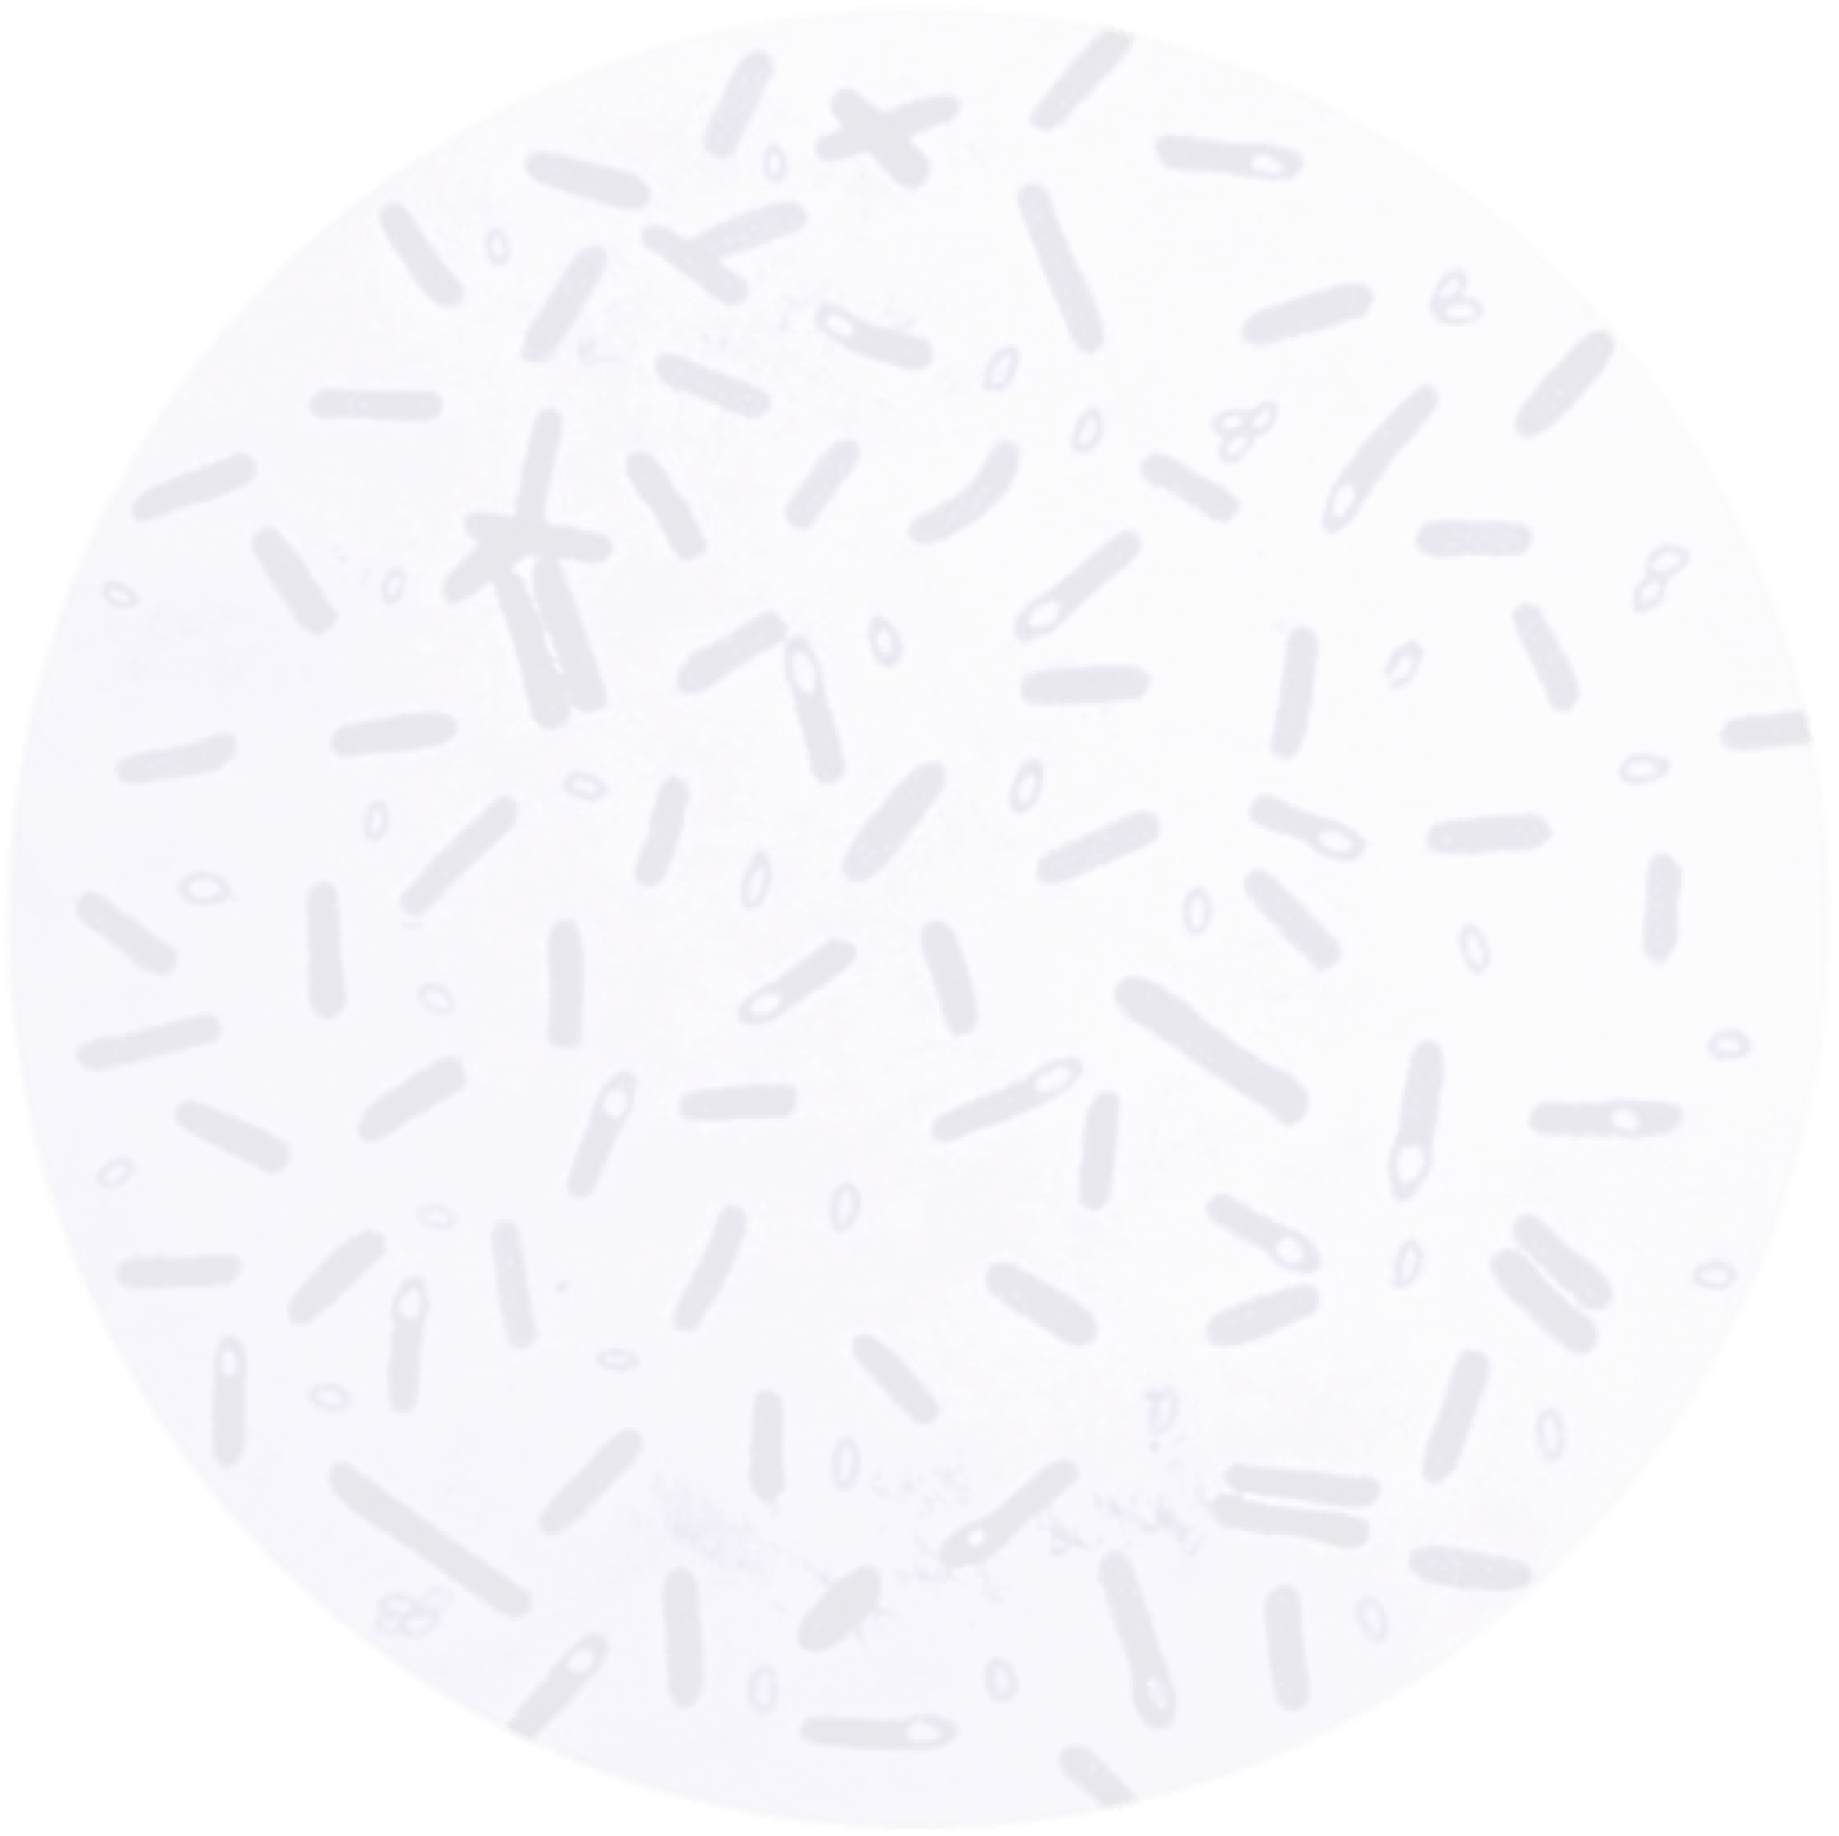 bacteria circle background